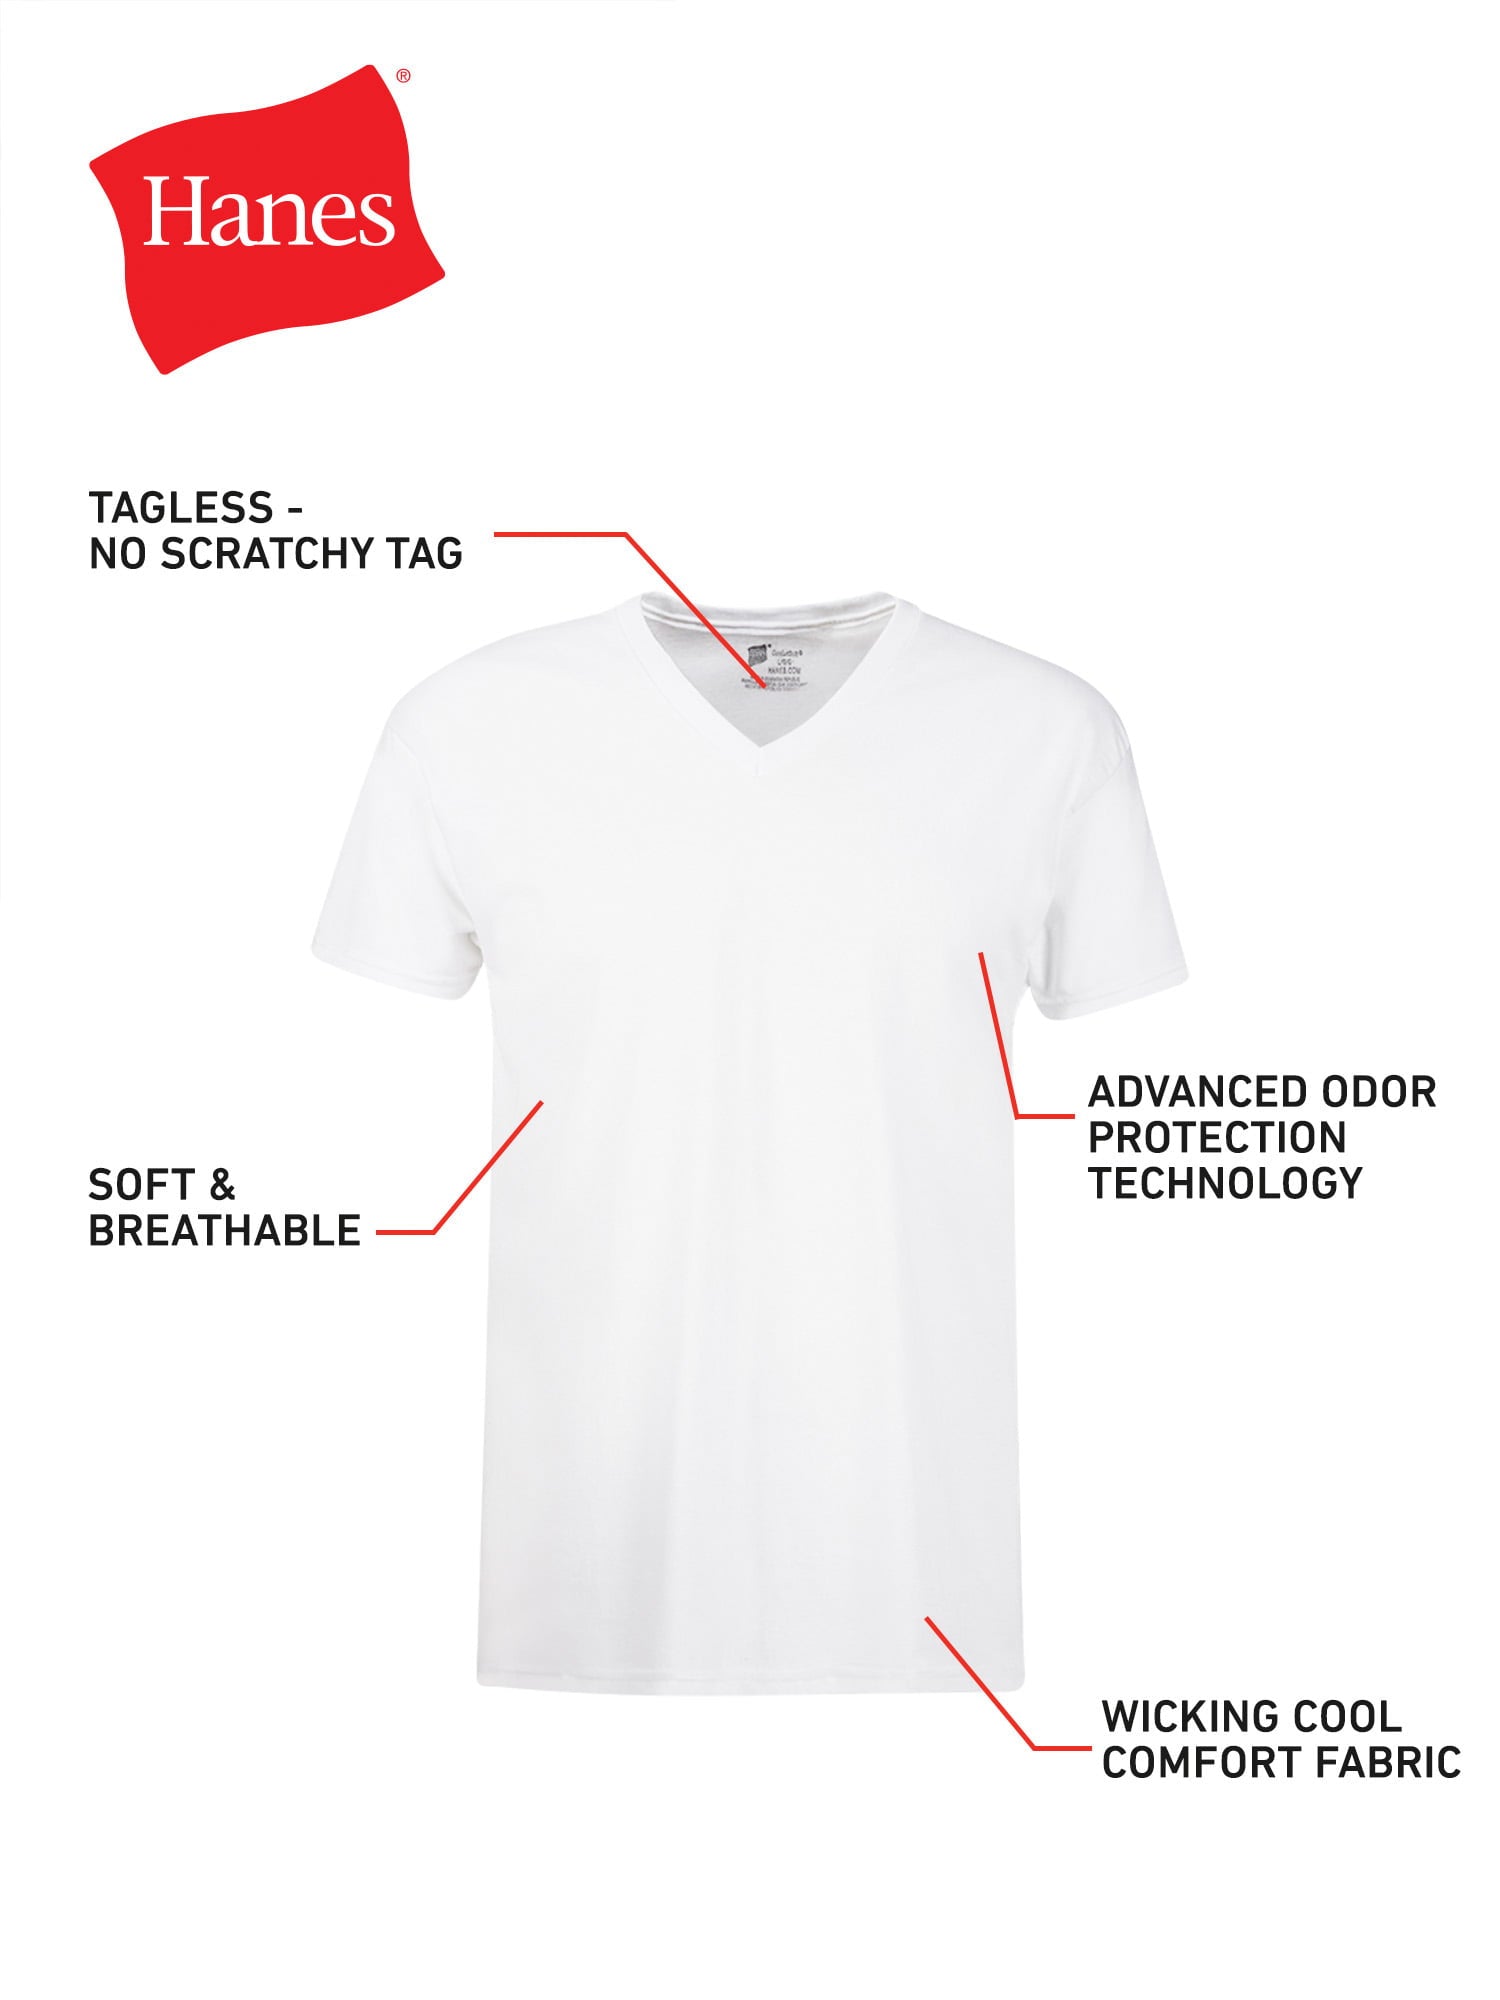 Hanes Men's Super Value Pack White V-Neck Undershirts, 10 Pack - image 6 of 9